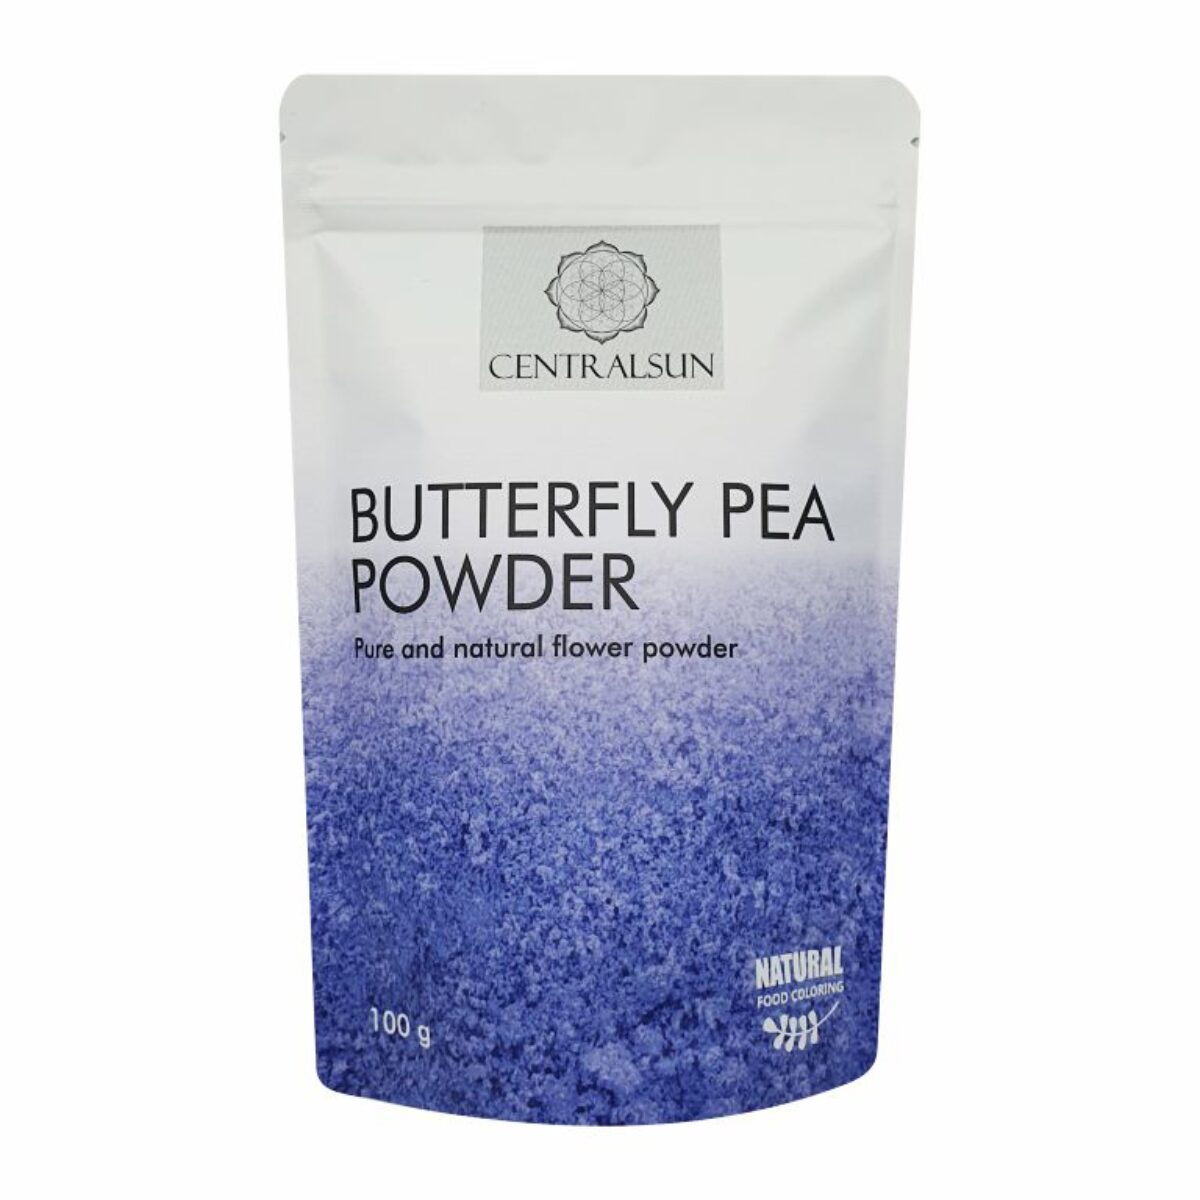 Butterfly Pea powder 100g